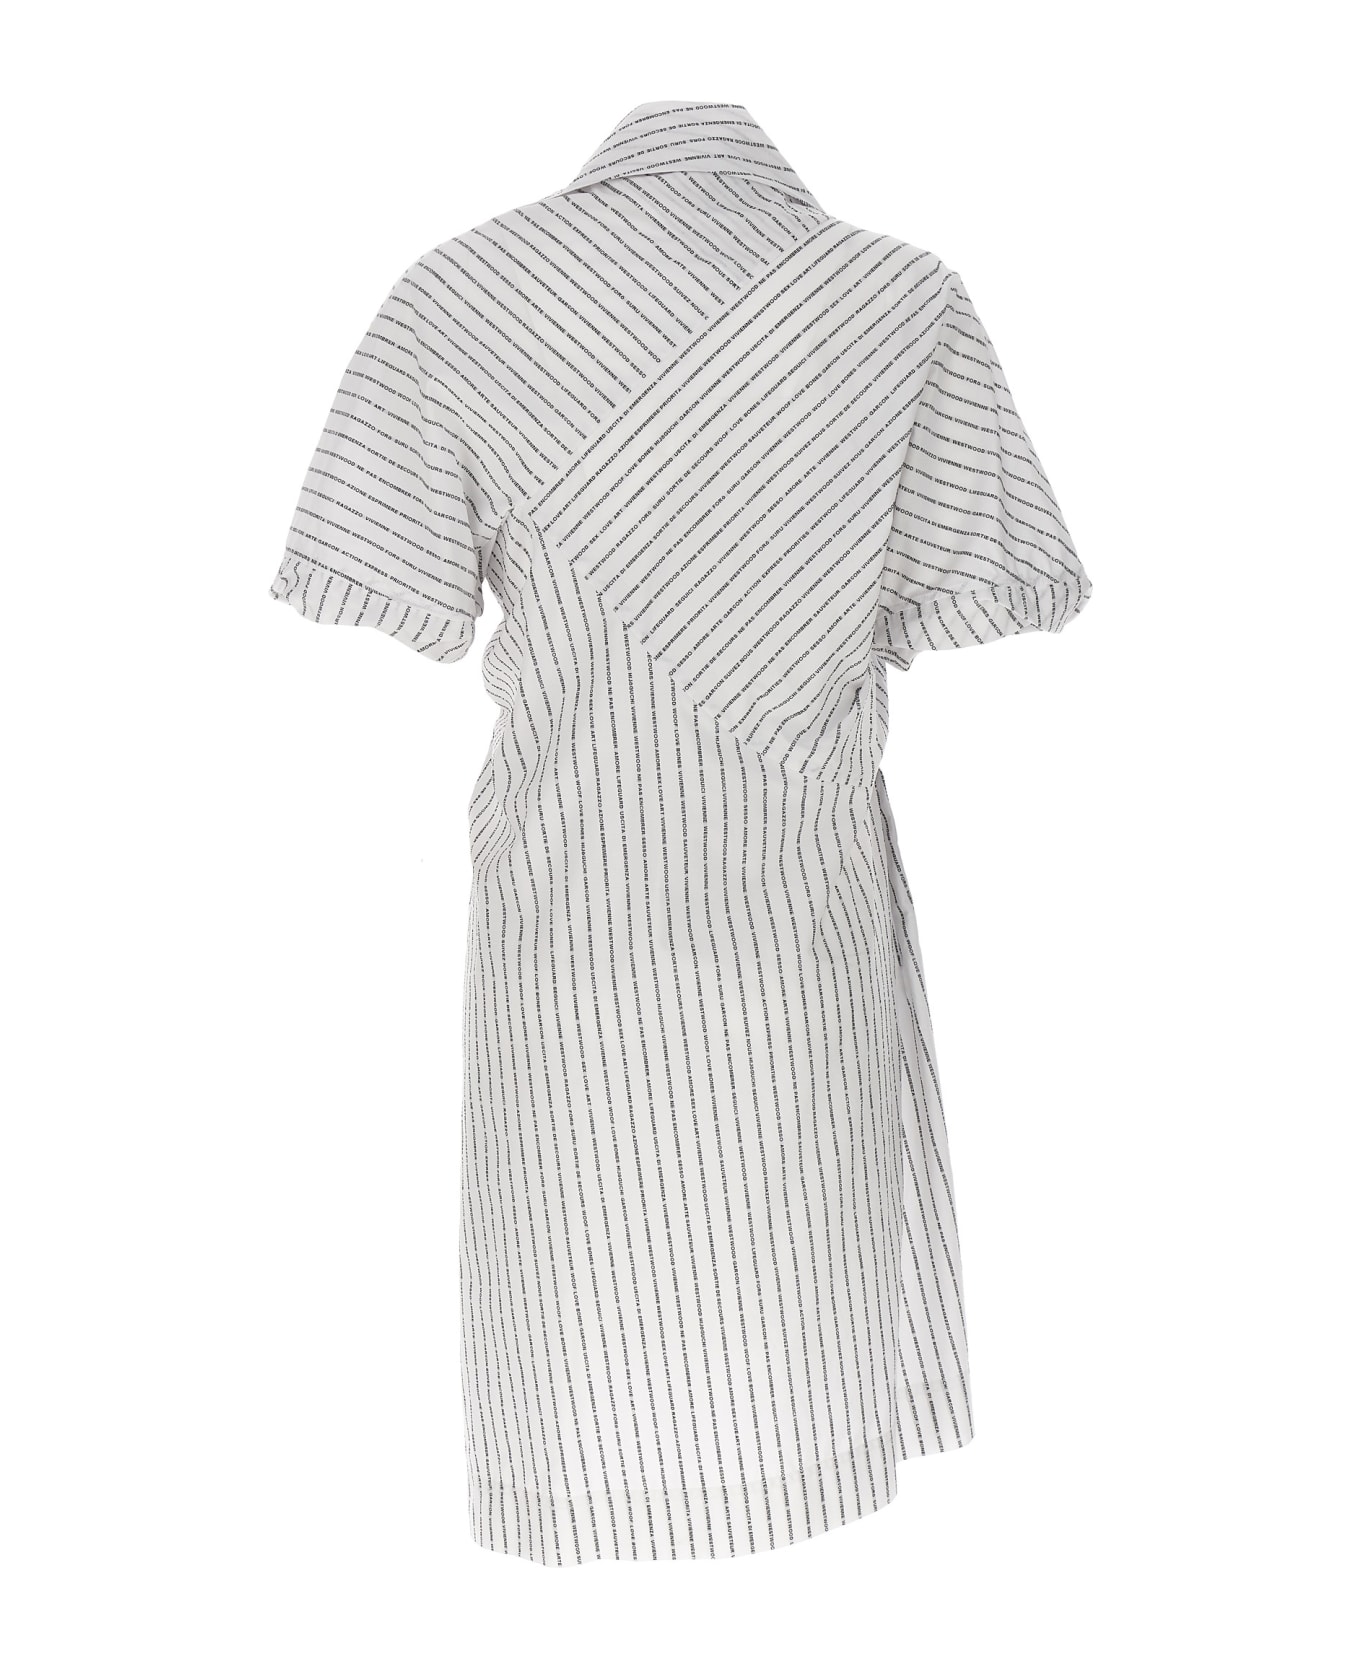 Vivienne Westwood 'natalia' Dress - White/Black